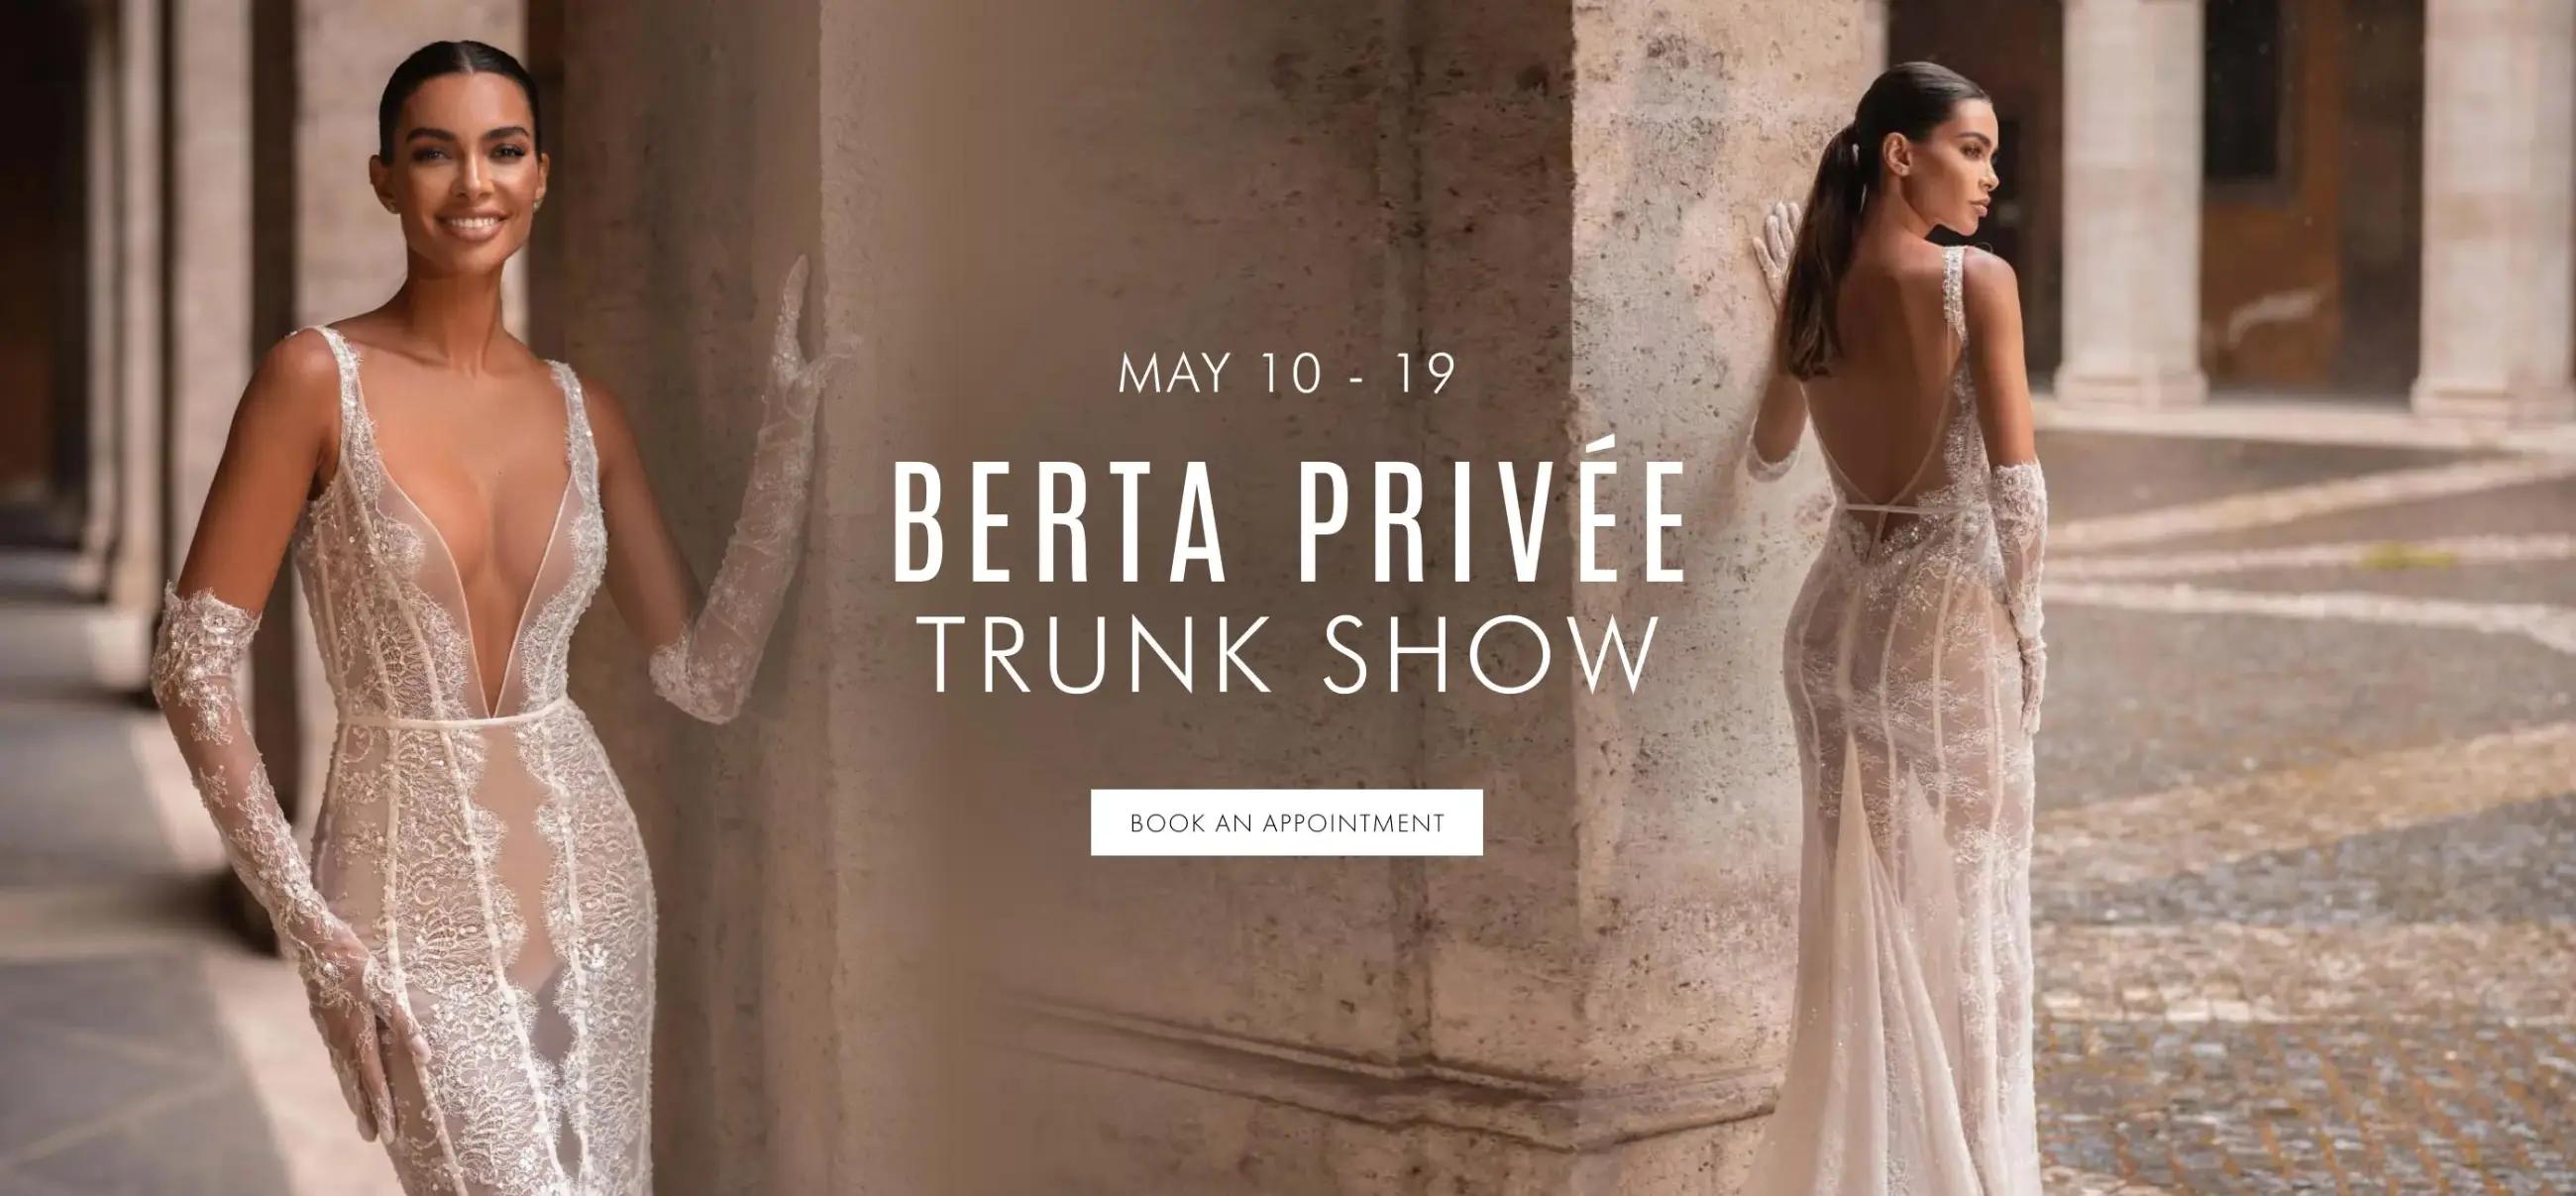 Berta Privee Trunk Show